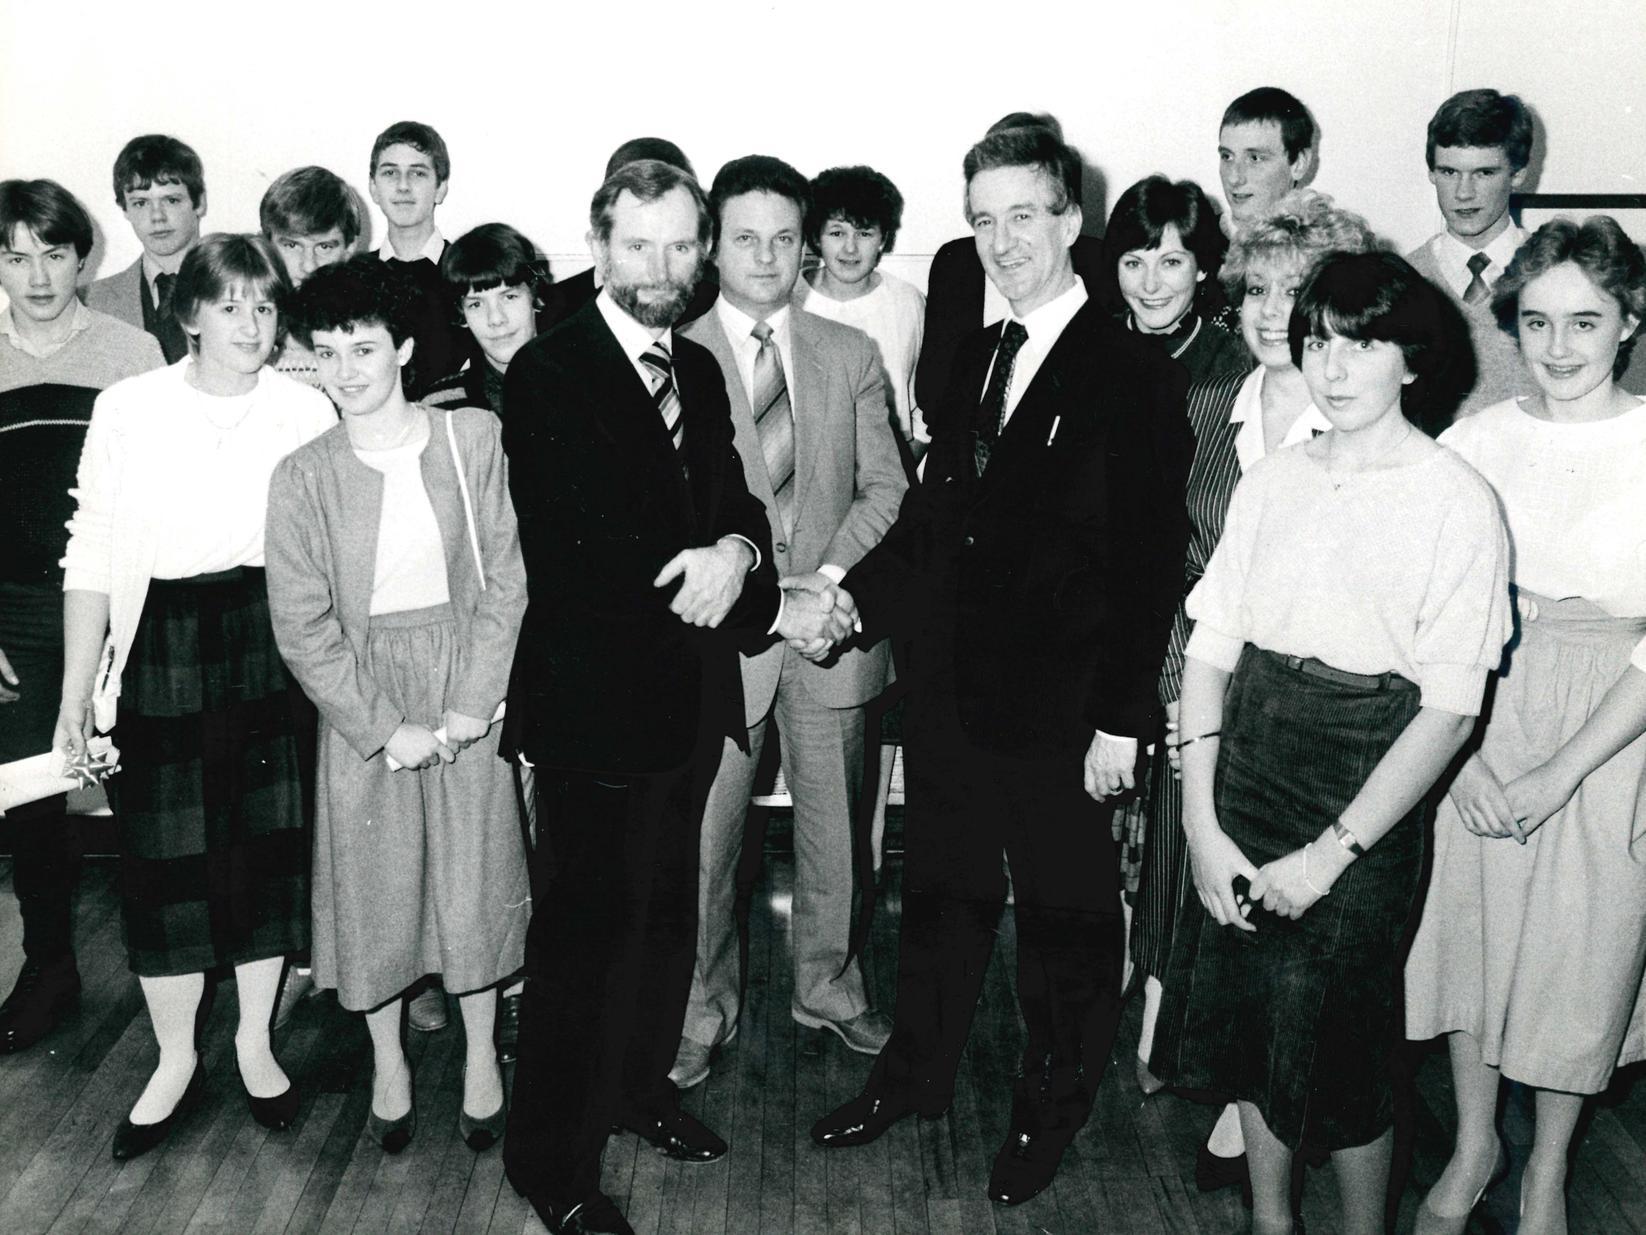 Kettlethorpe High School prize giving, 1983